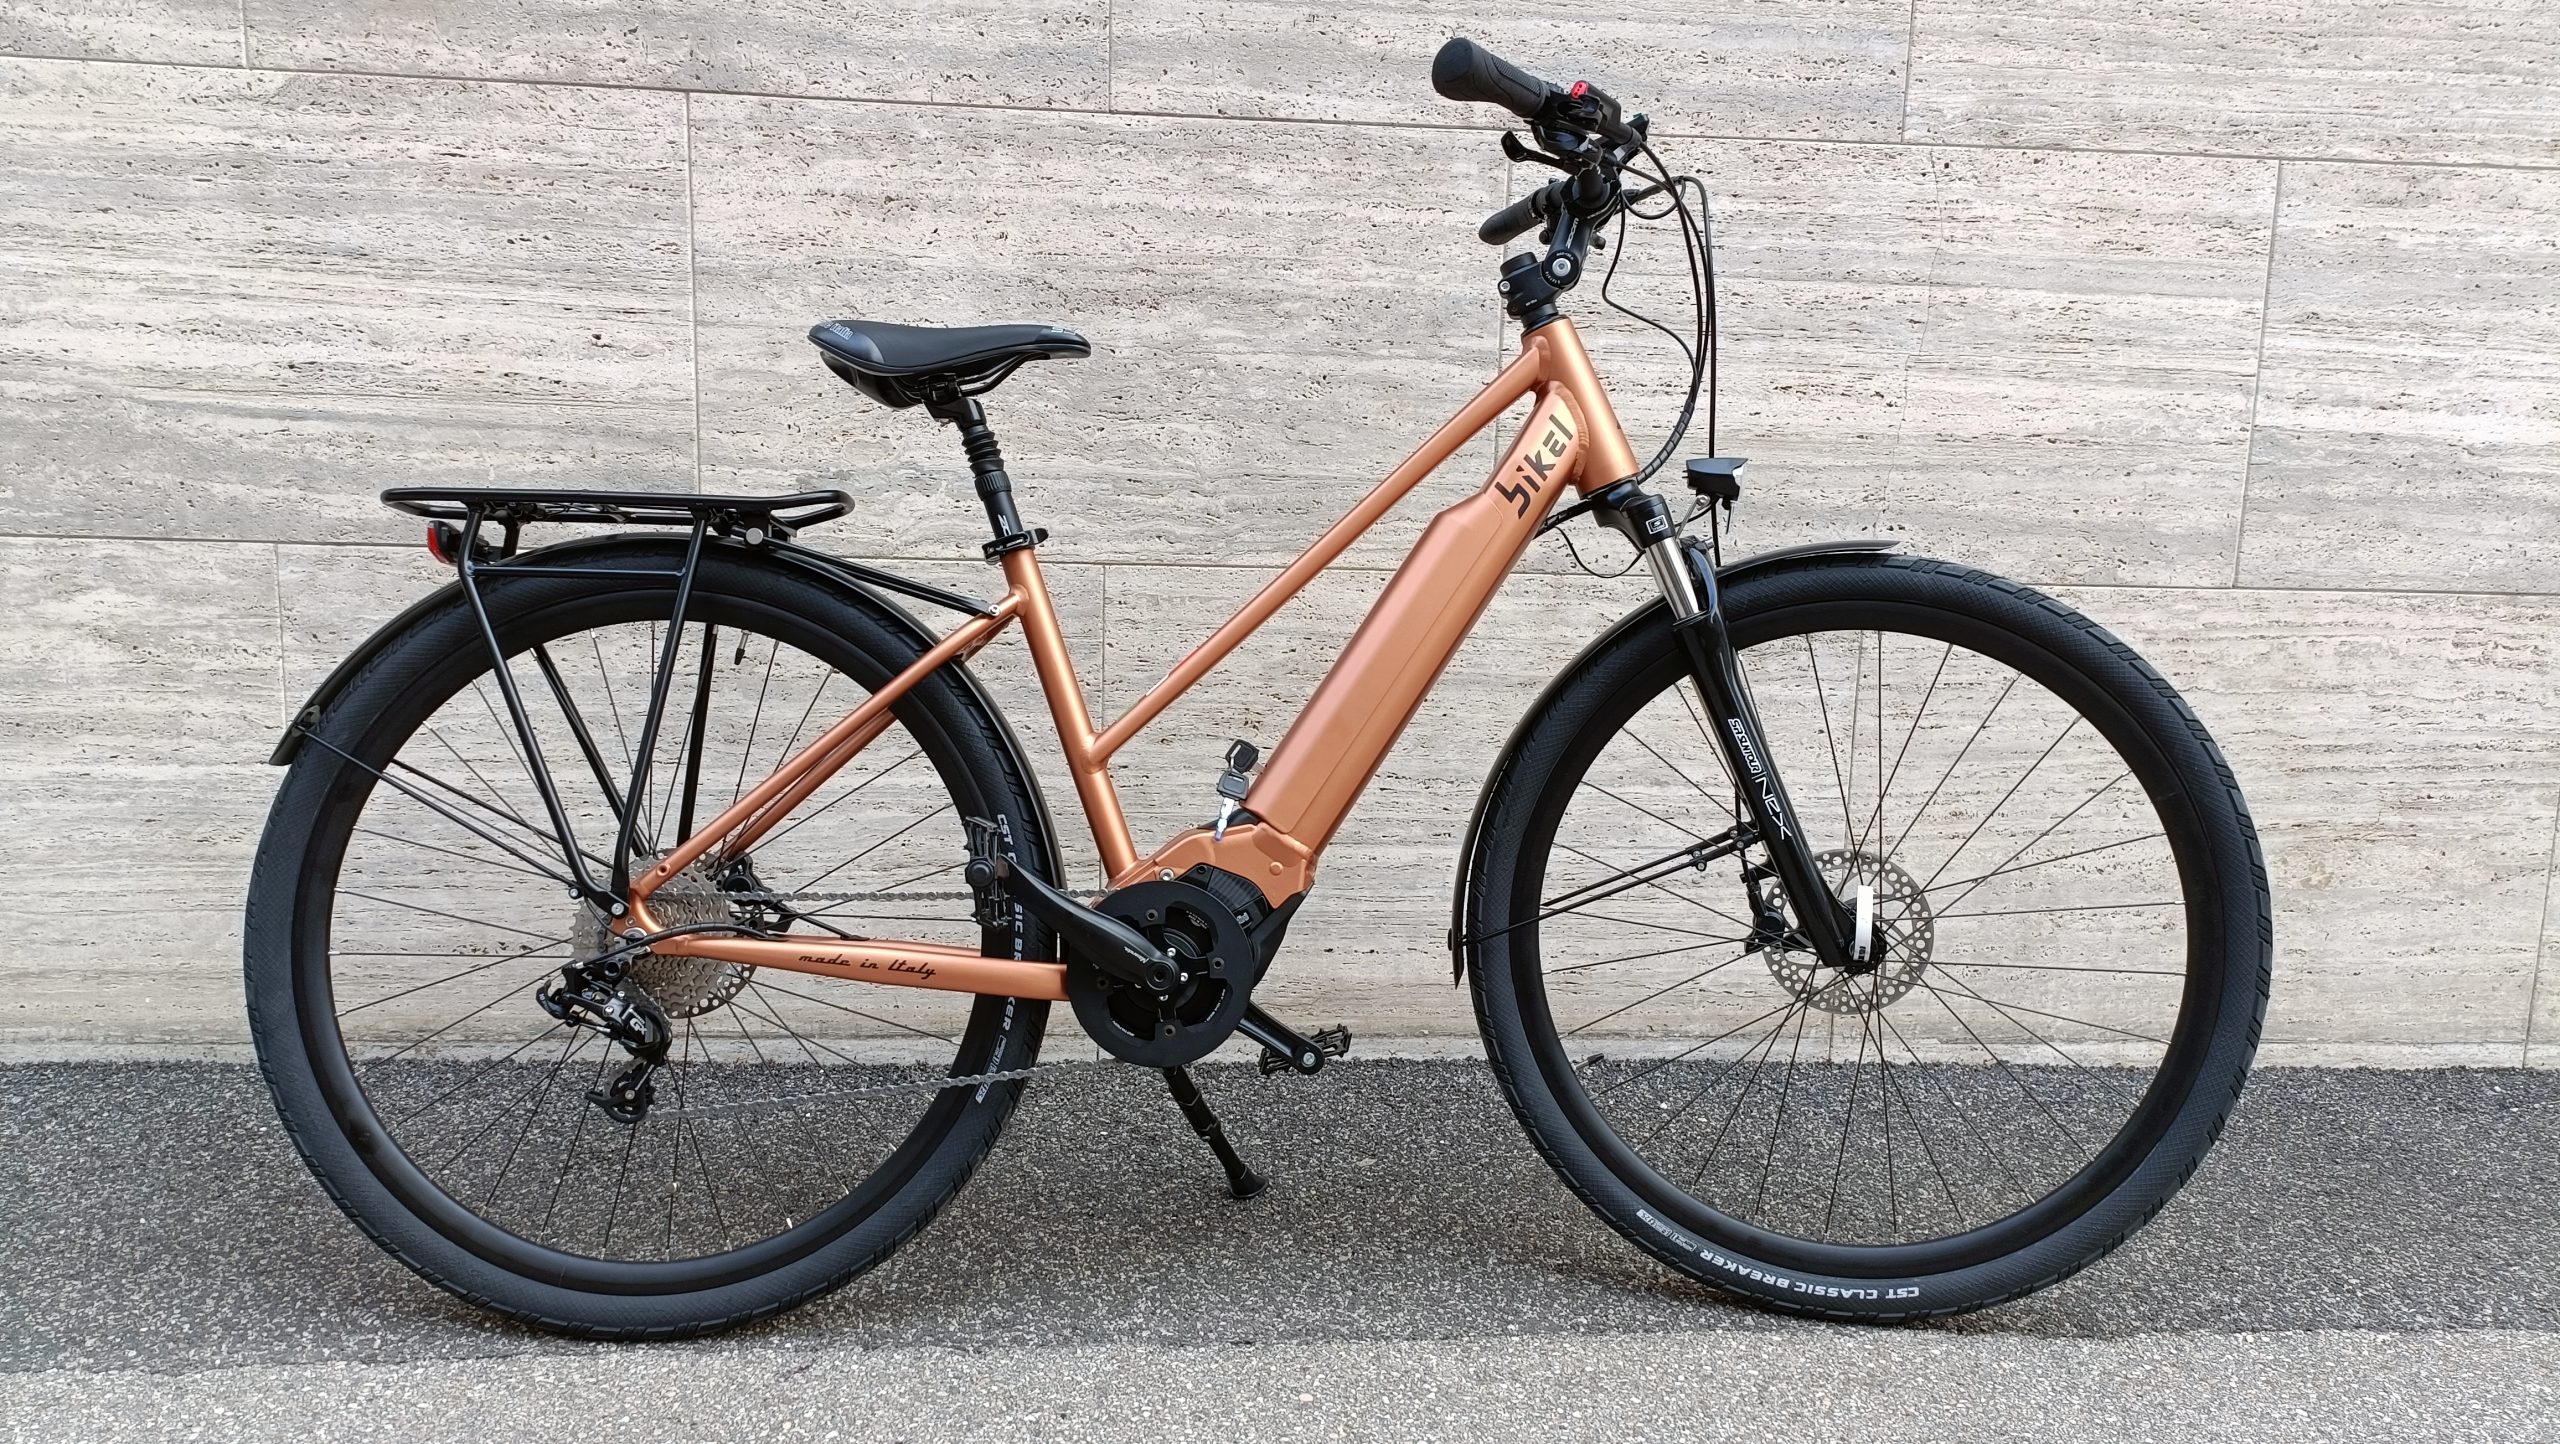 greenbike pesaro-bici elettriche pesaro-bici trekking elettriche-Bikel-modello Trekking